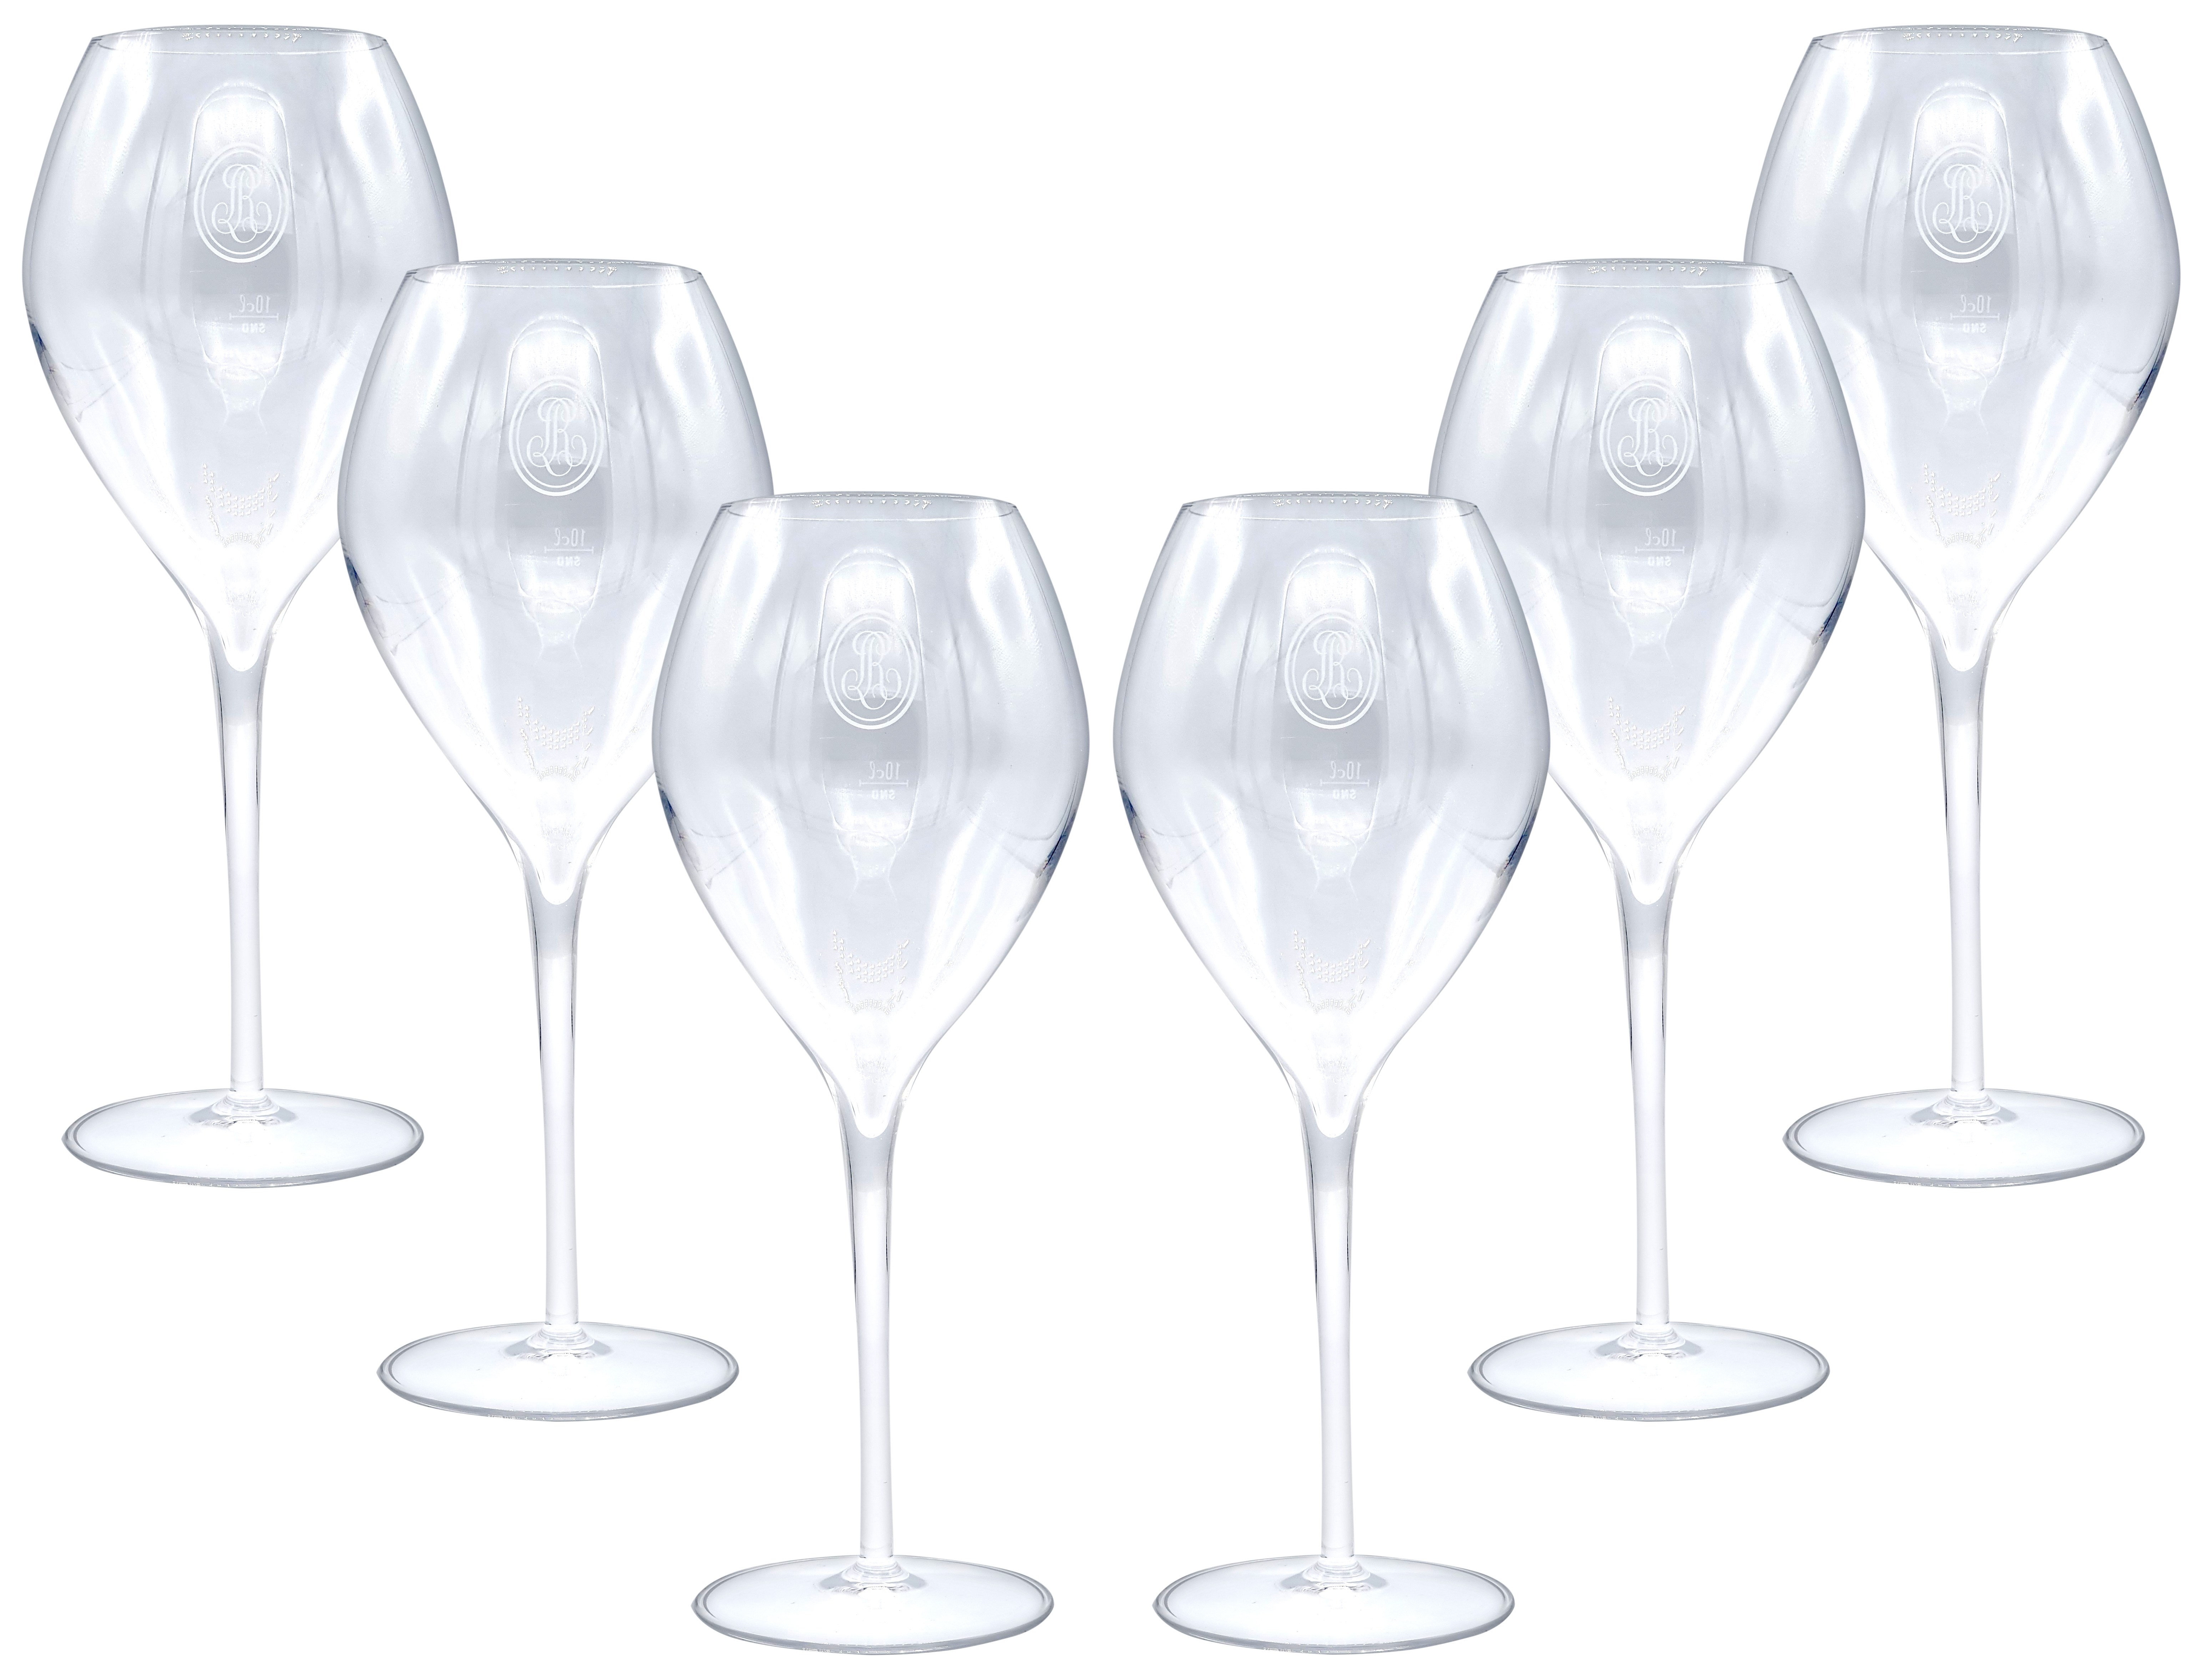 Louis Roederer Champagner Sekt Glas Gläser-Set - 6x Gläser 